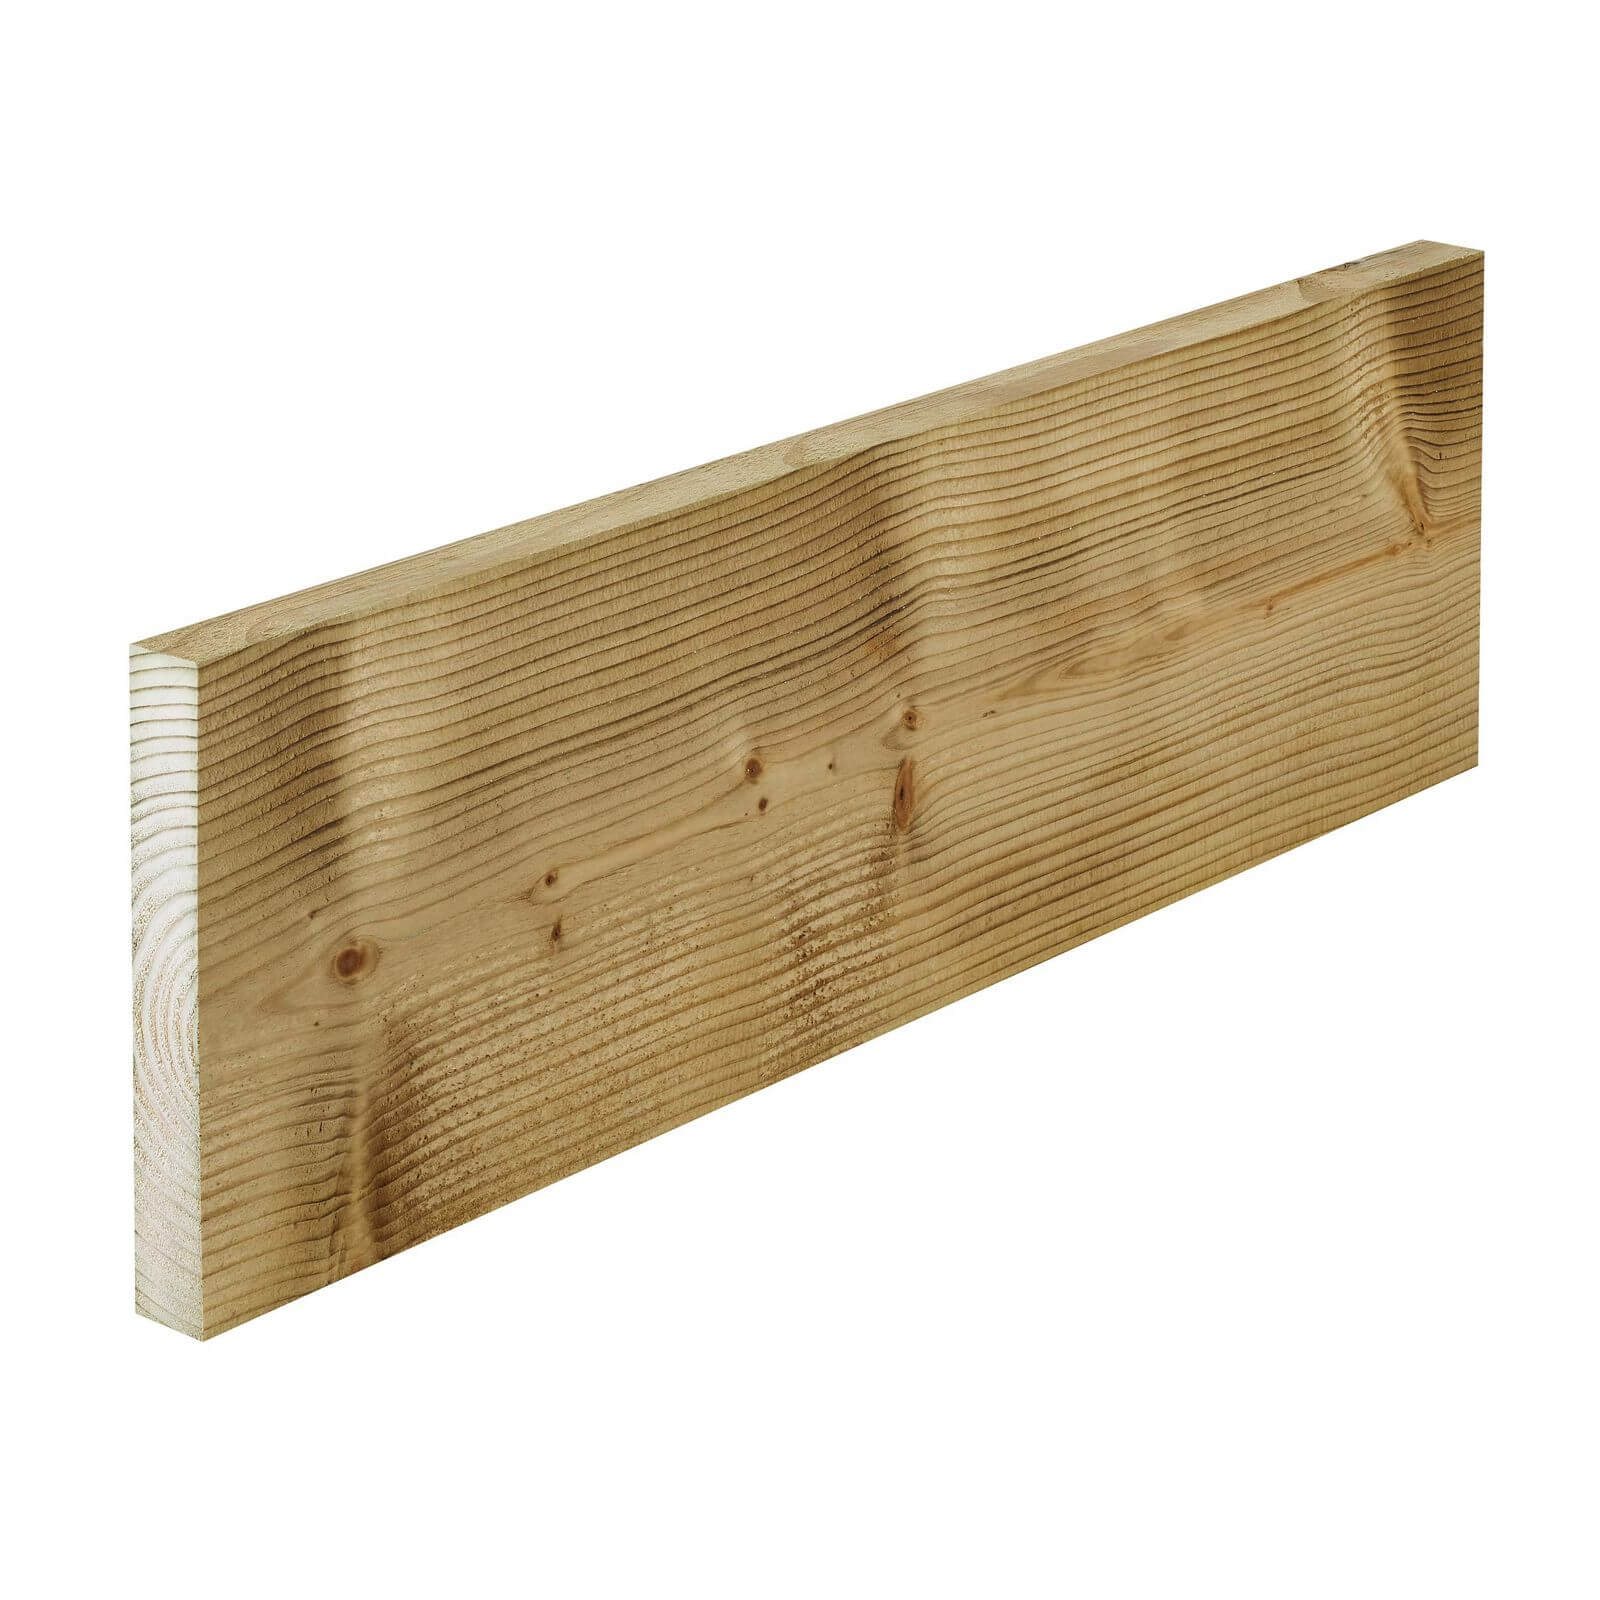 Metsa Sawn Treated Stick Softwood Timber 1.8m (22 x 144 x 1800mm)